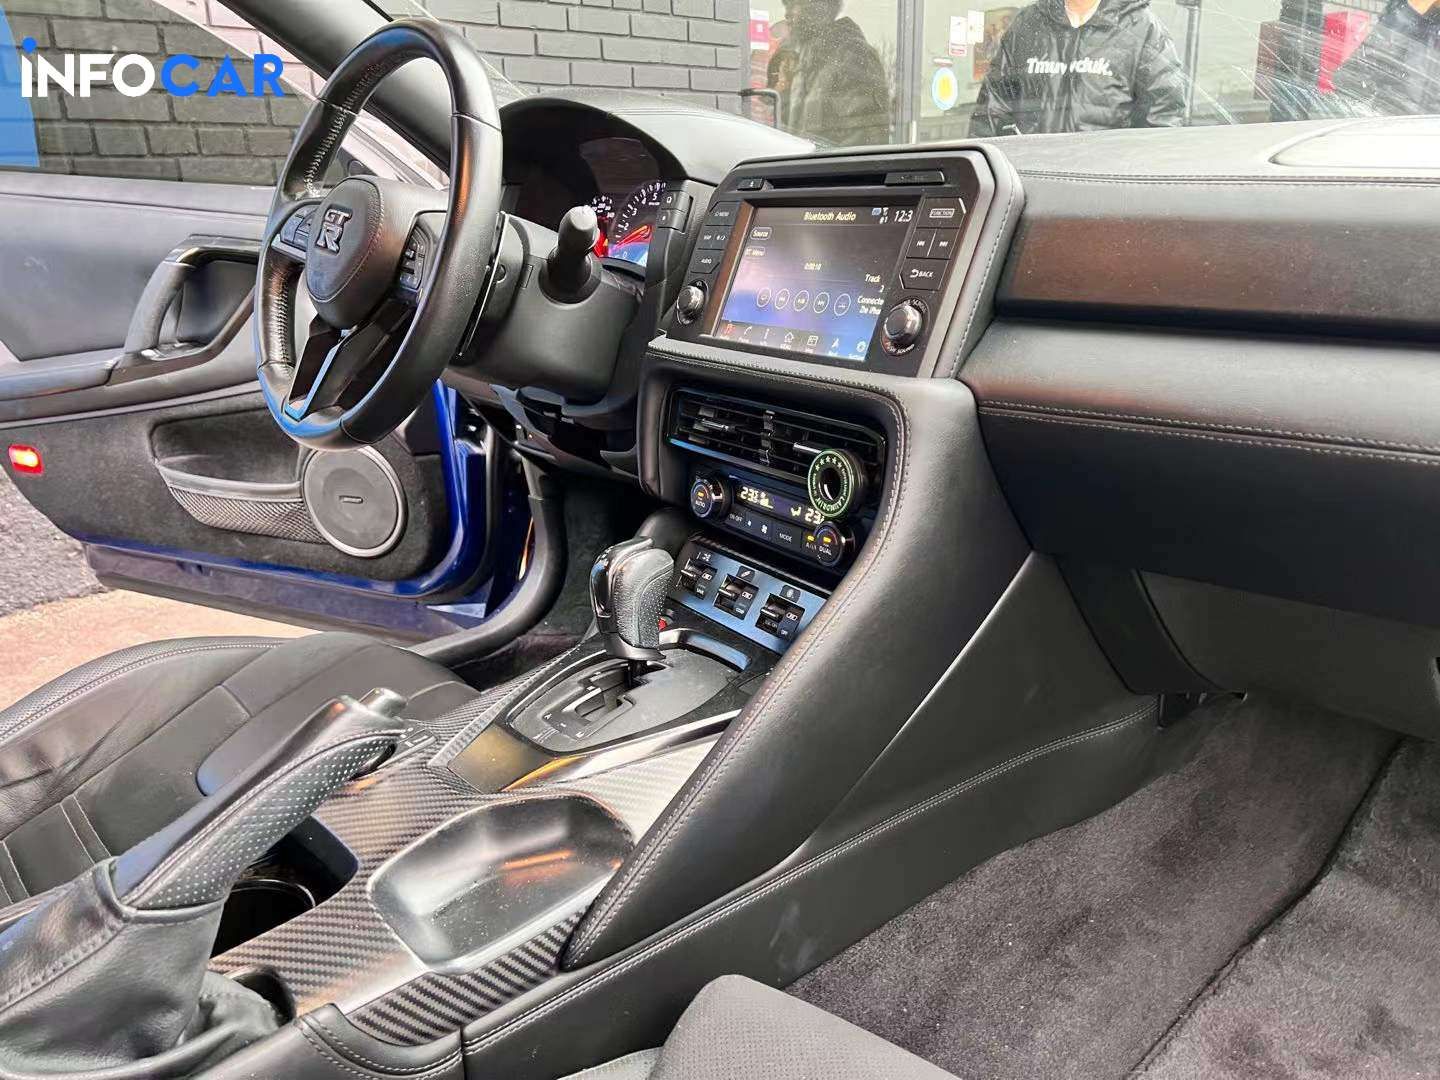 2018 Nissan GT-R null - INFOCAR - Toronto Auto Trading Platform